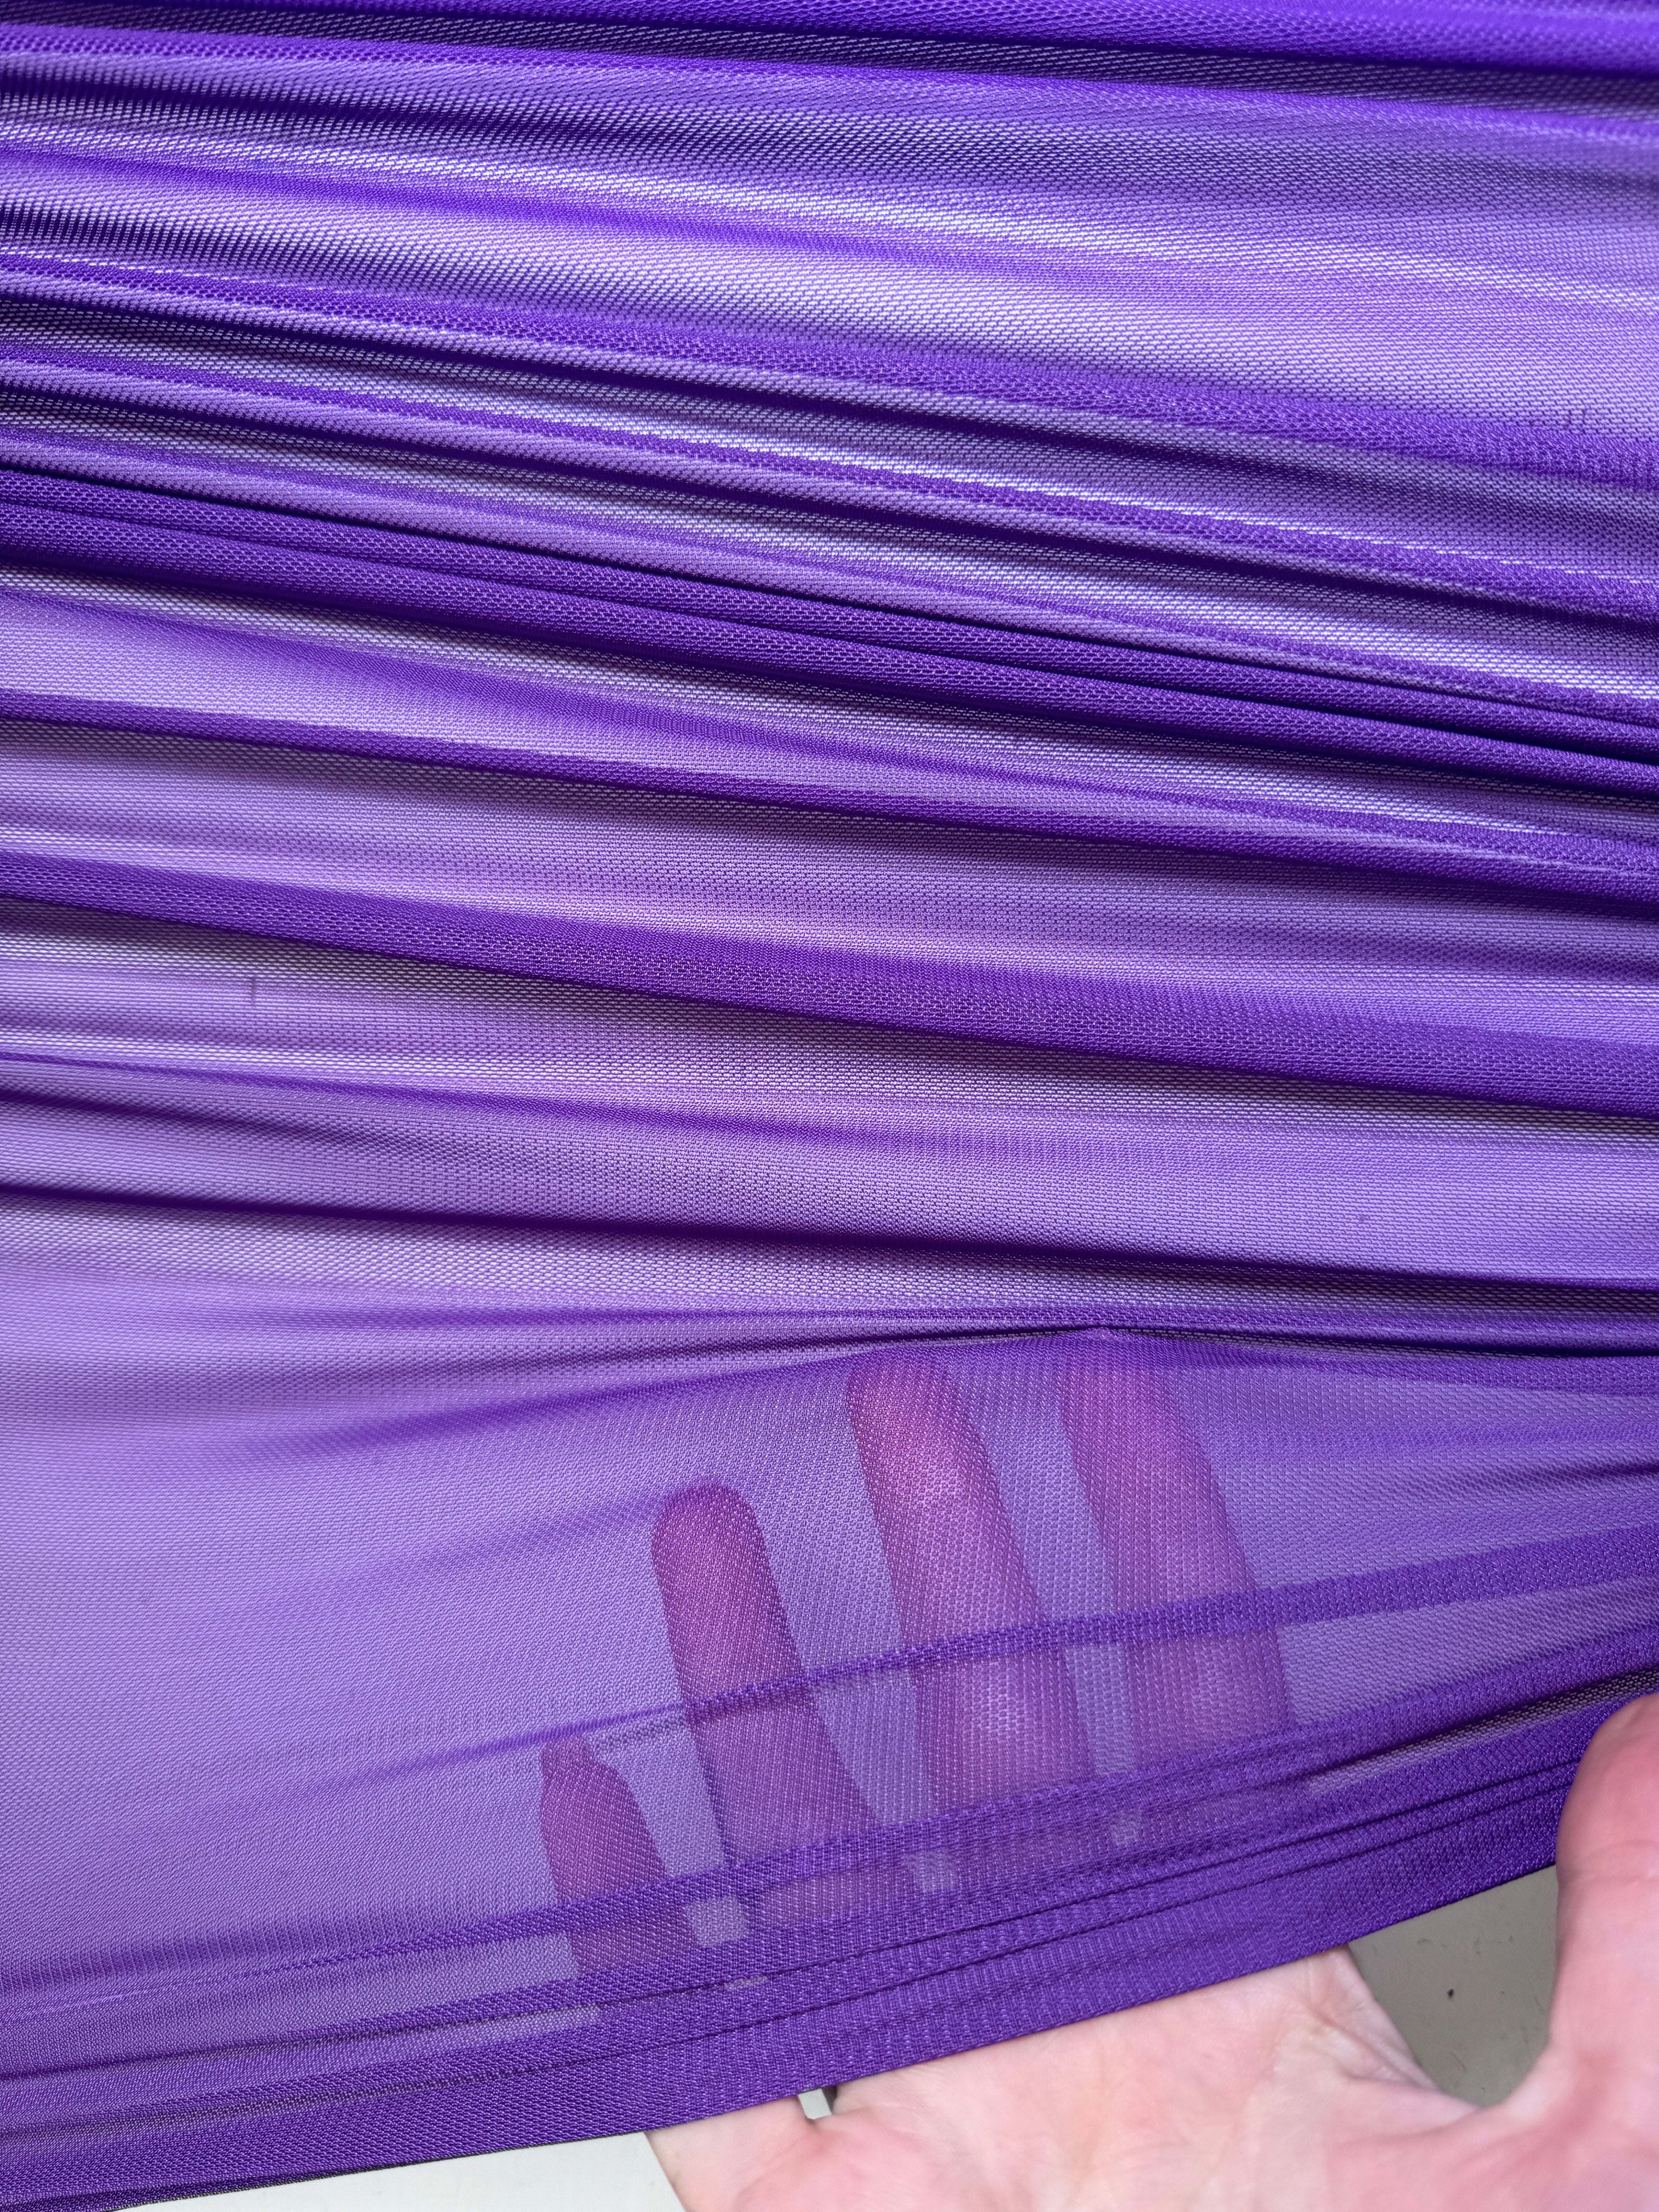 purple 4way stretch power mesh, dark purple power mesh, light purple power mesh, lavender power mesh